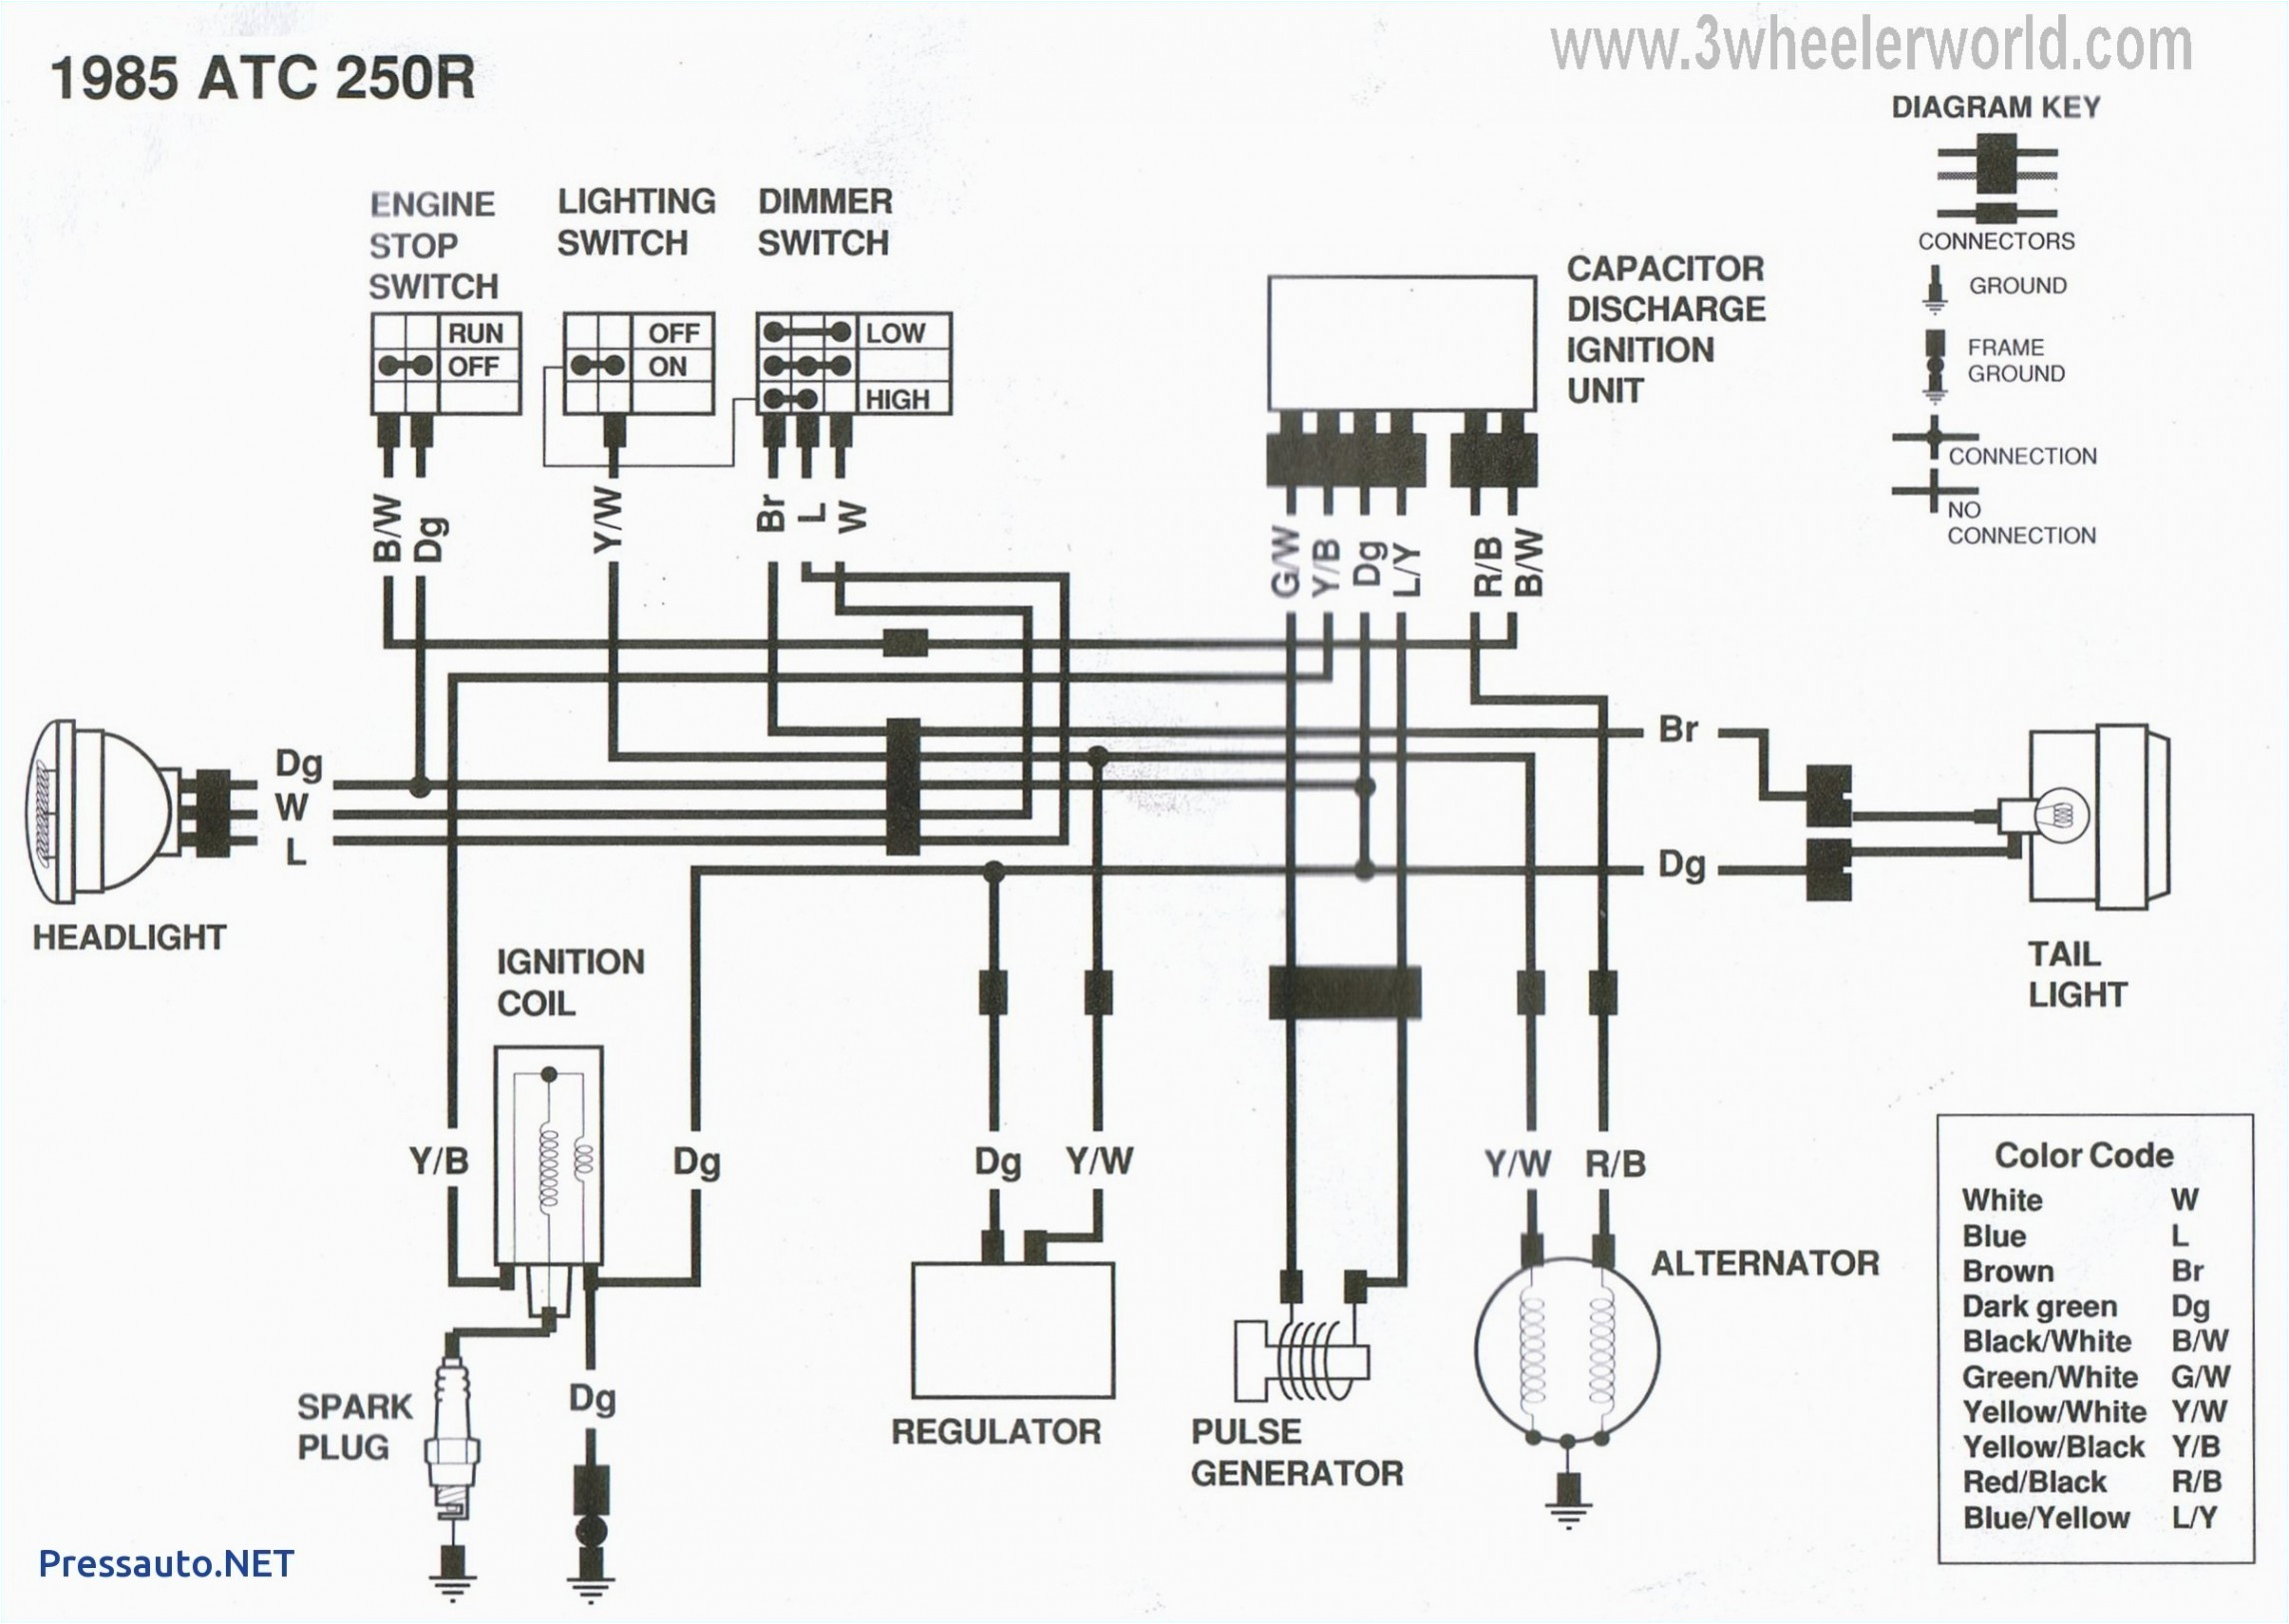 fuse box diagram 1979 yamaha 1100 wiring diagram sheet 2009 yamaha rhino 700 fuse box diagram yamaha fuse box diagram